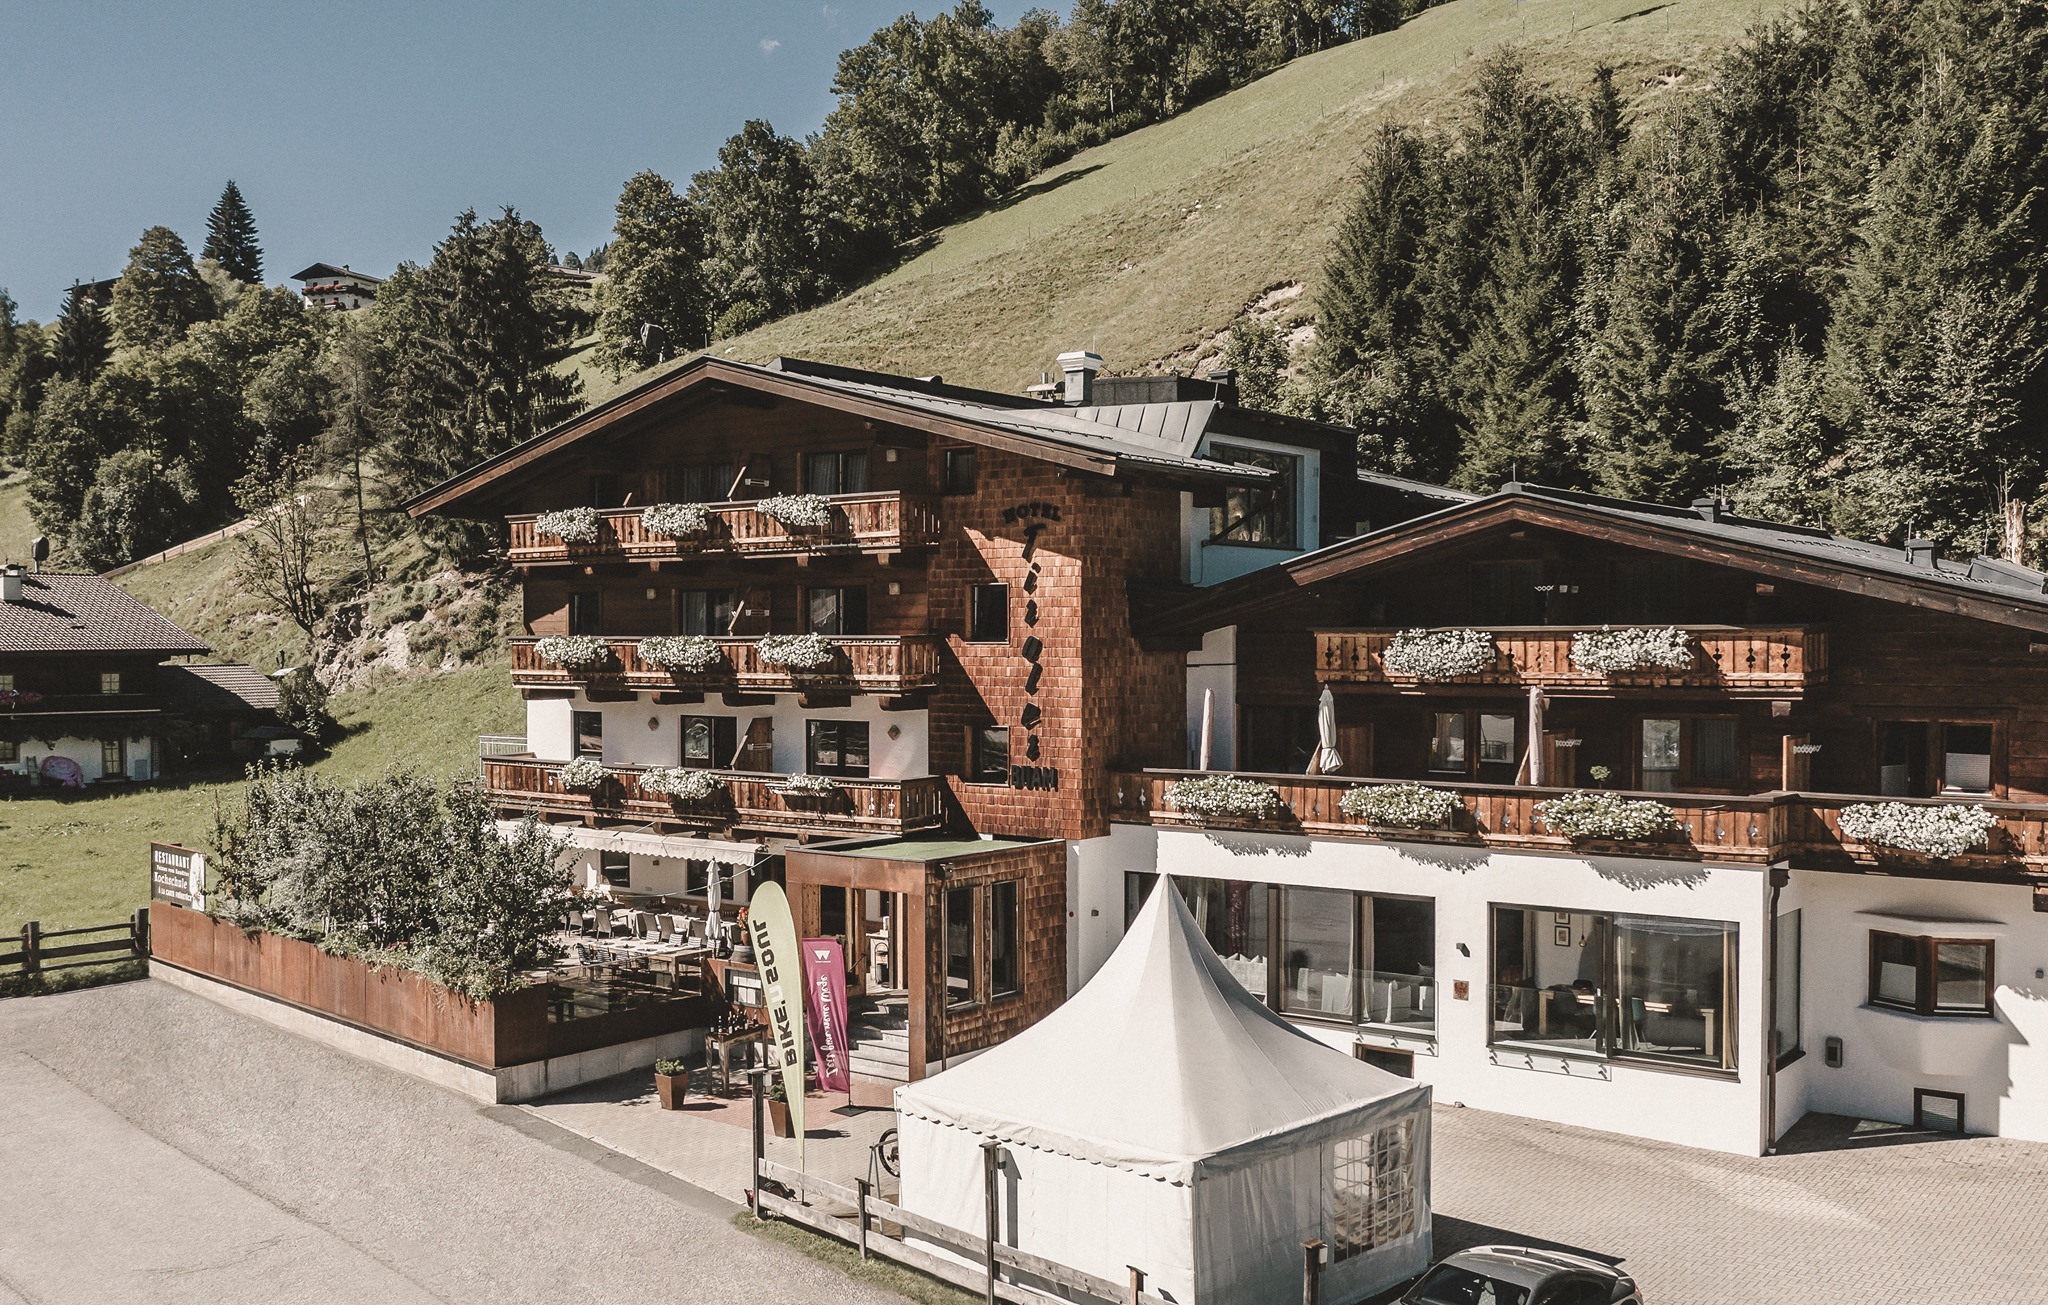 Hotel Tiroler Buam - Familie Mair bei Salzburg schmeckt